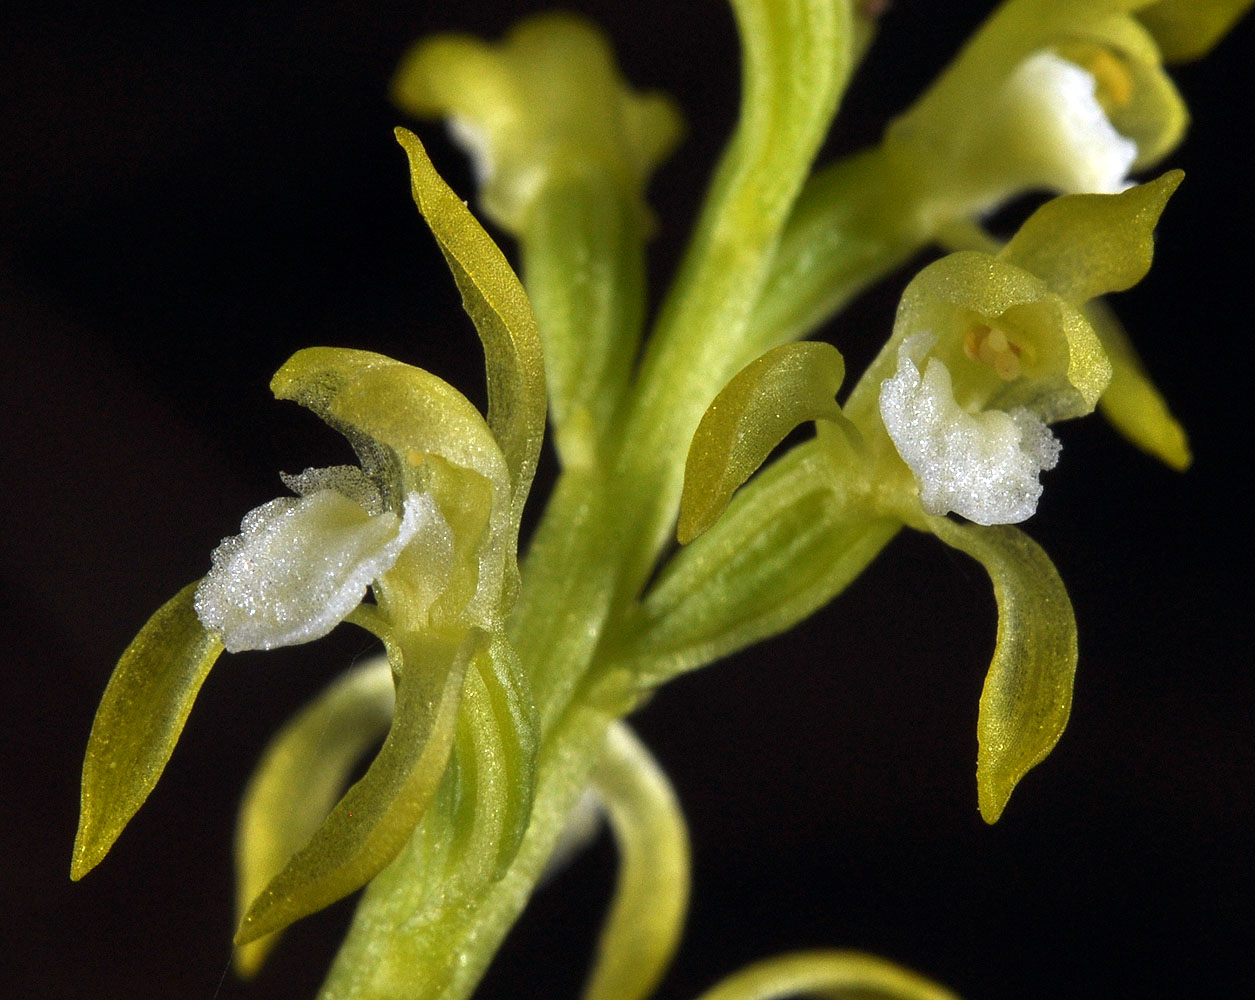 Flora of Eastern Washington Image: Corallorhiza trifida